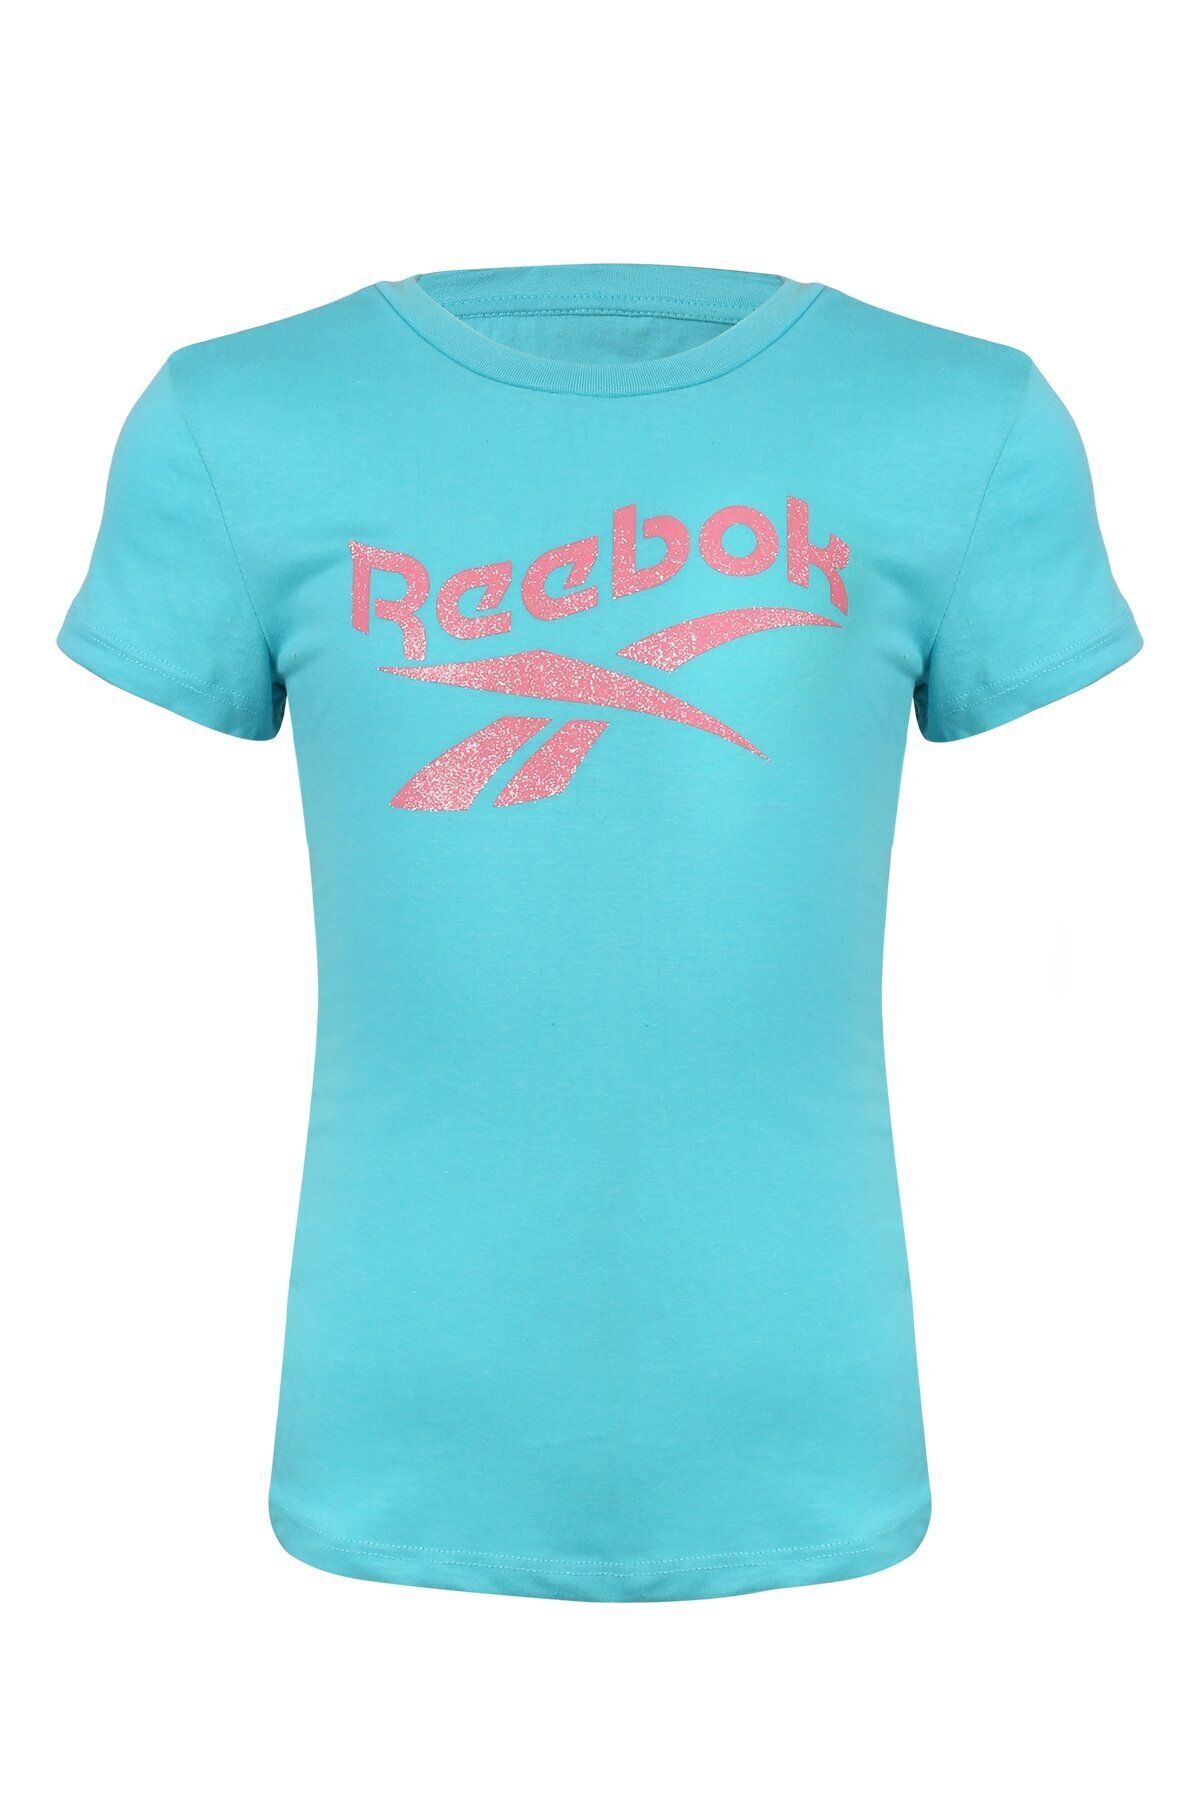 Reebok BIG WAVY TEE Mavi Kız Çocuk Kısa Kol T-Shirt